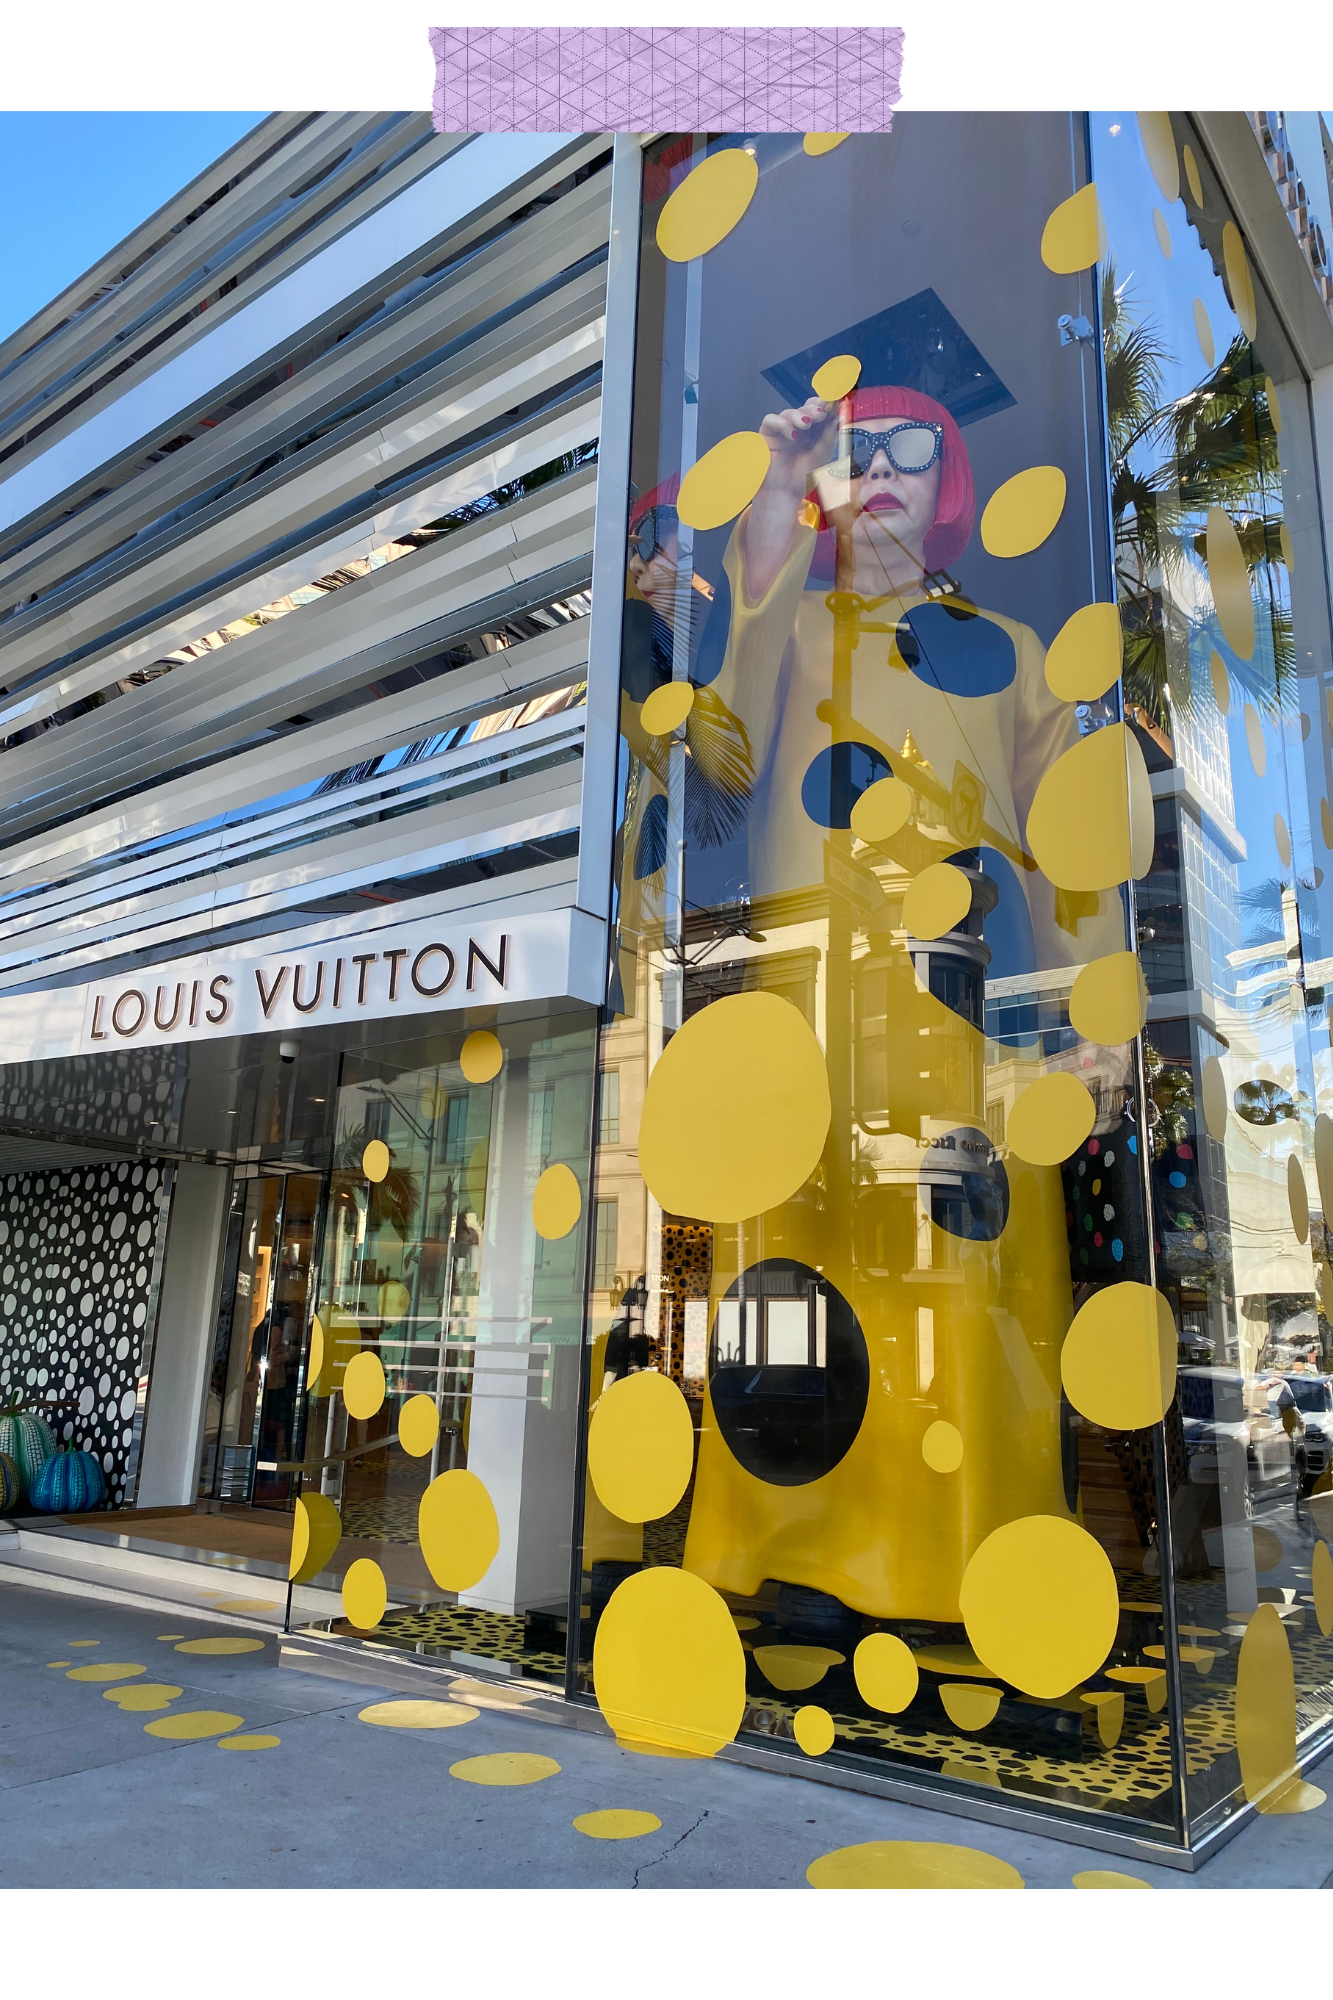 Louis Vuitton x Yayoi Kusama 3D anamorphic Billboard in Tokyo I